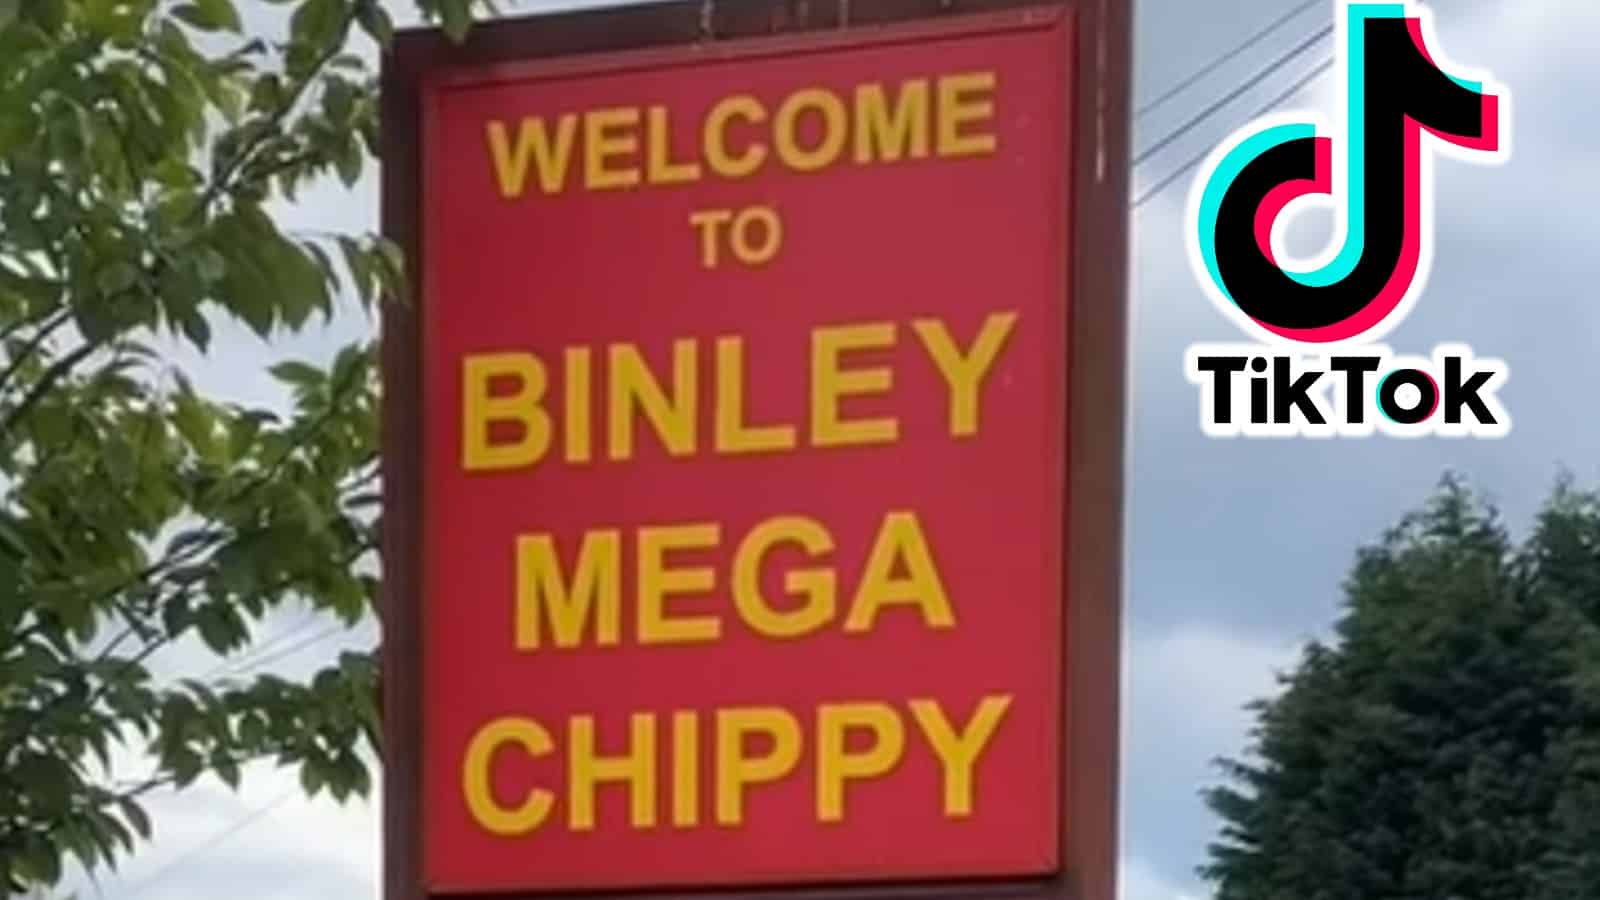 Binley Mega Chippy sign with TikTok logo